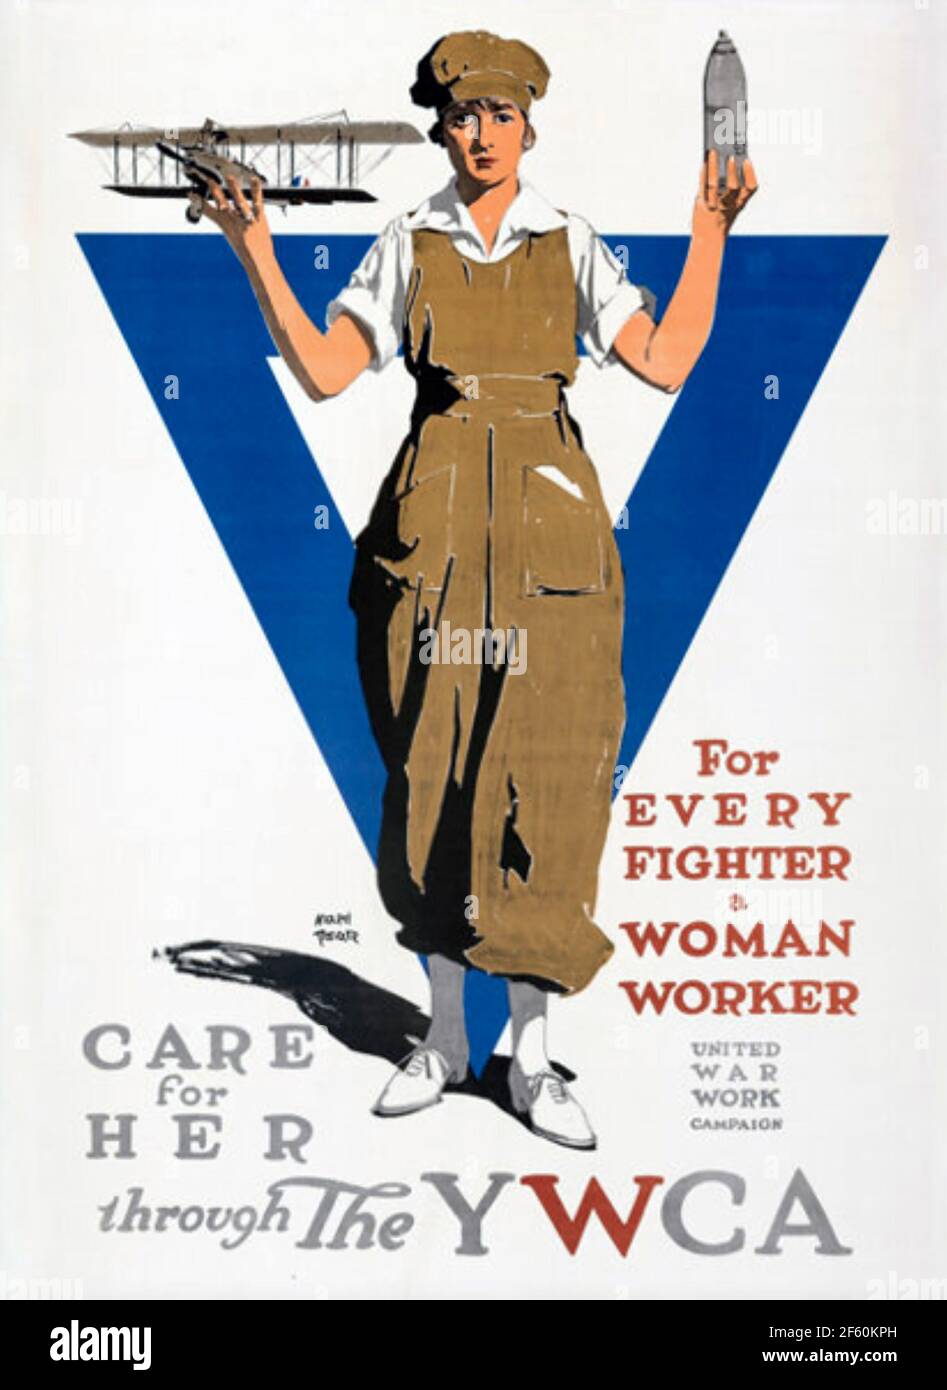 AMERICAN YWCA RECRUITING POSTER 1919 Stock Photo